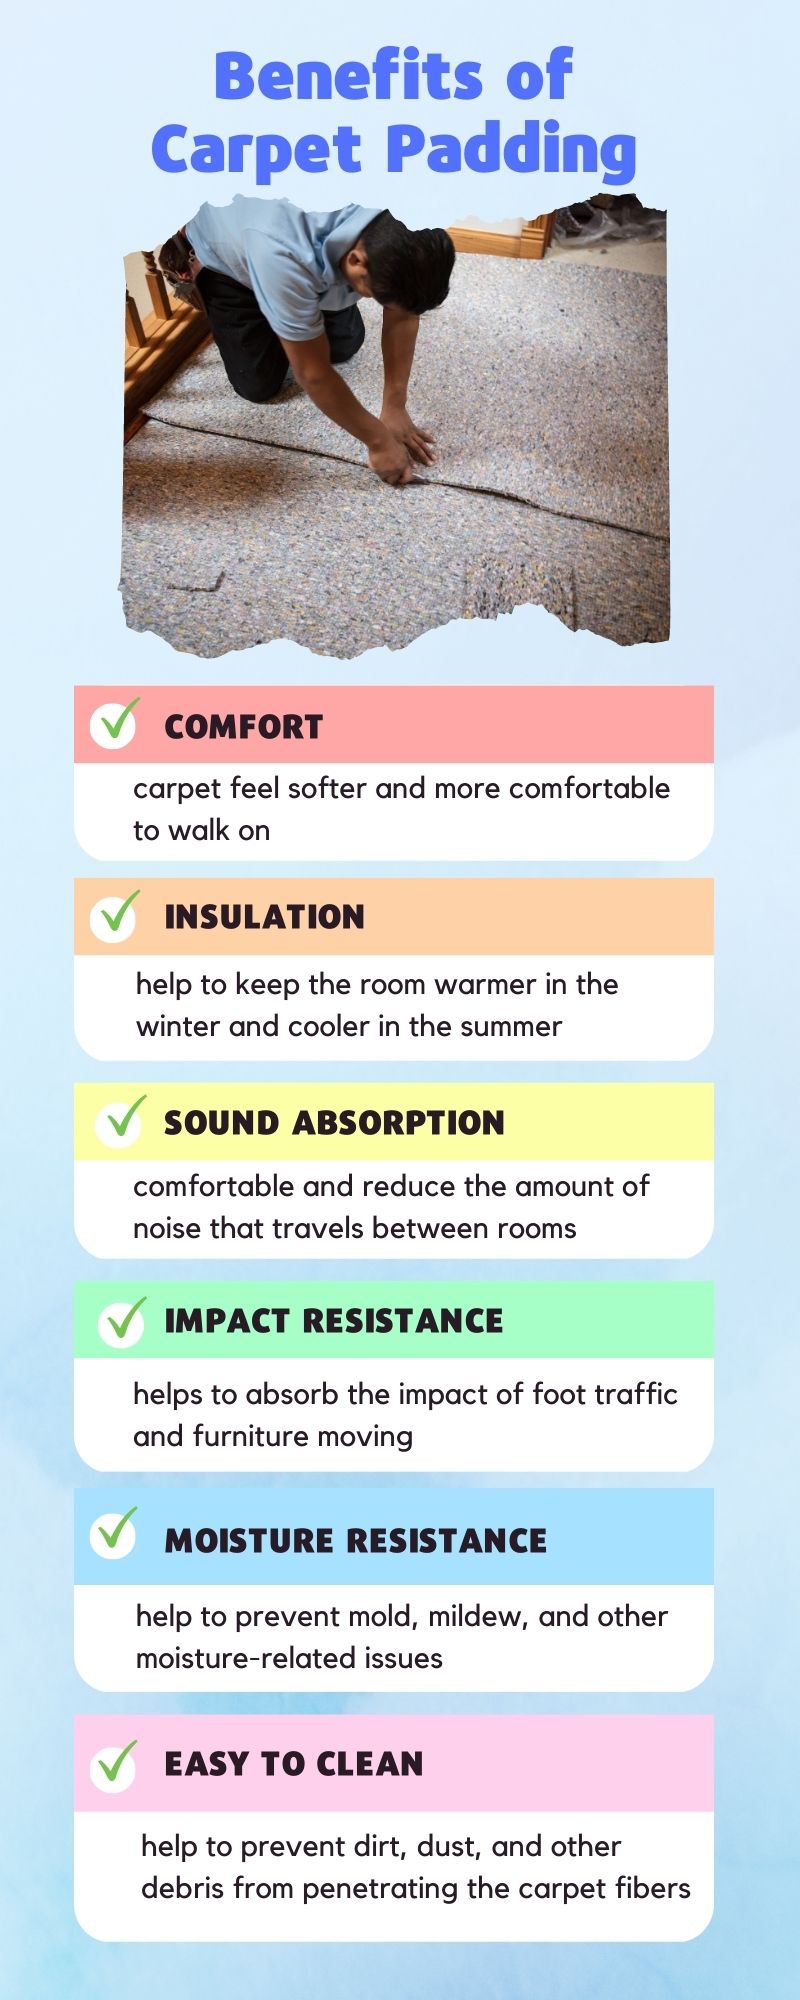 Benefits of Carpet Padding